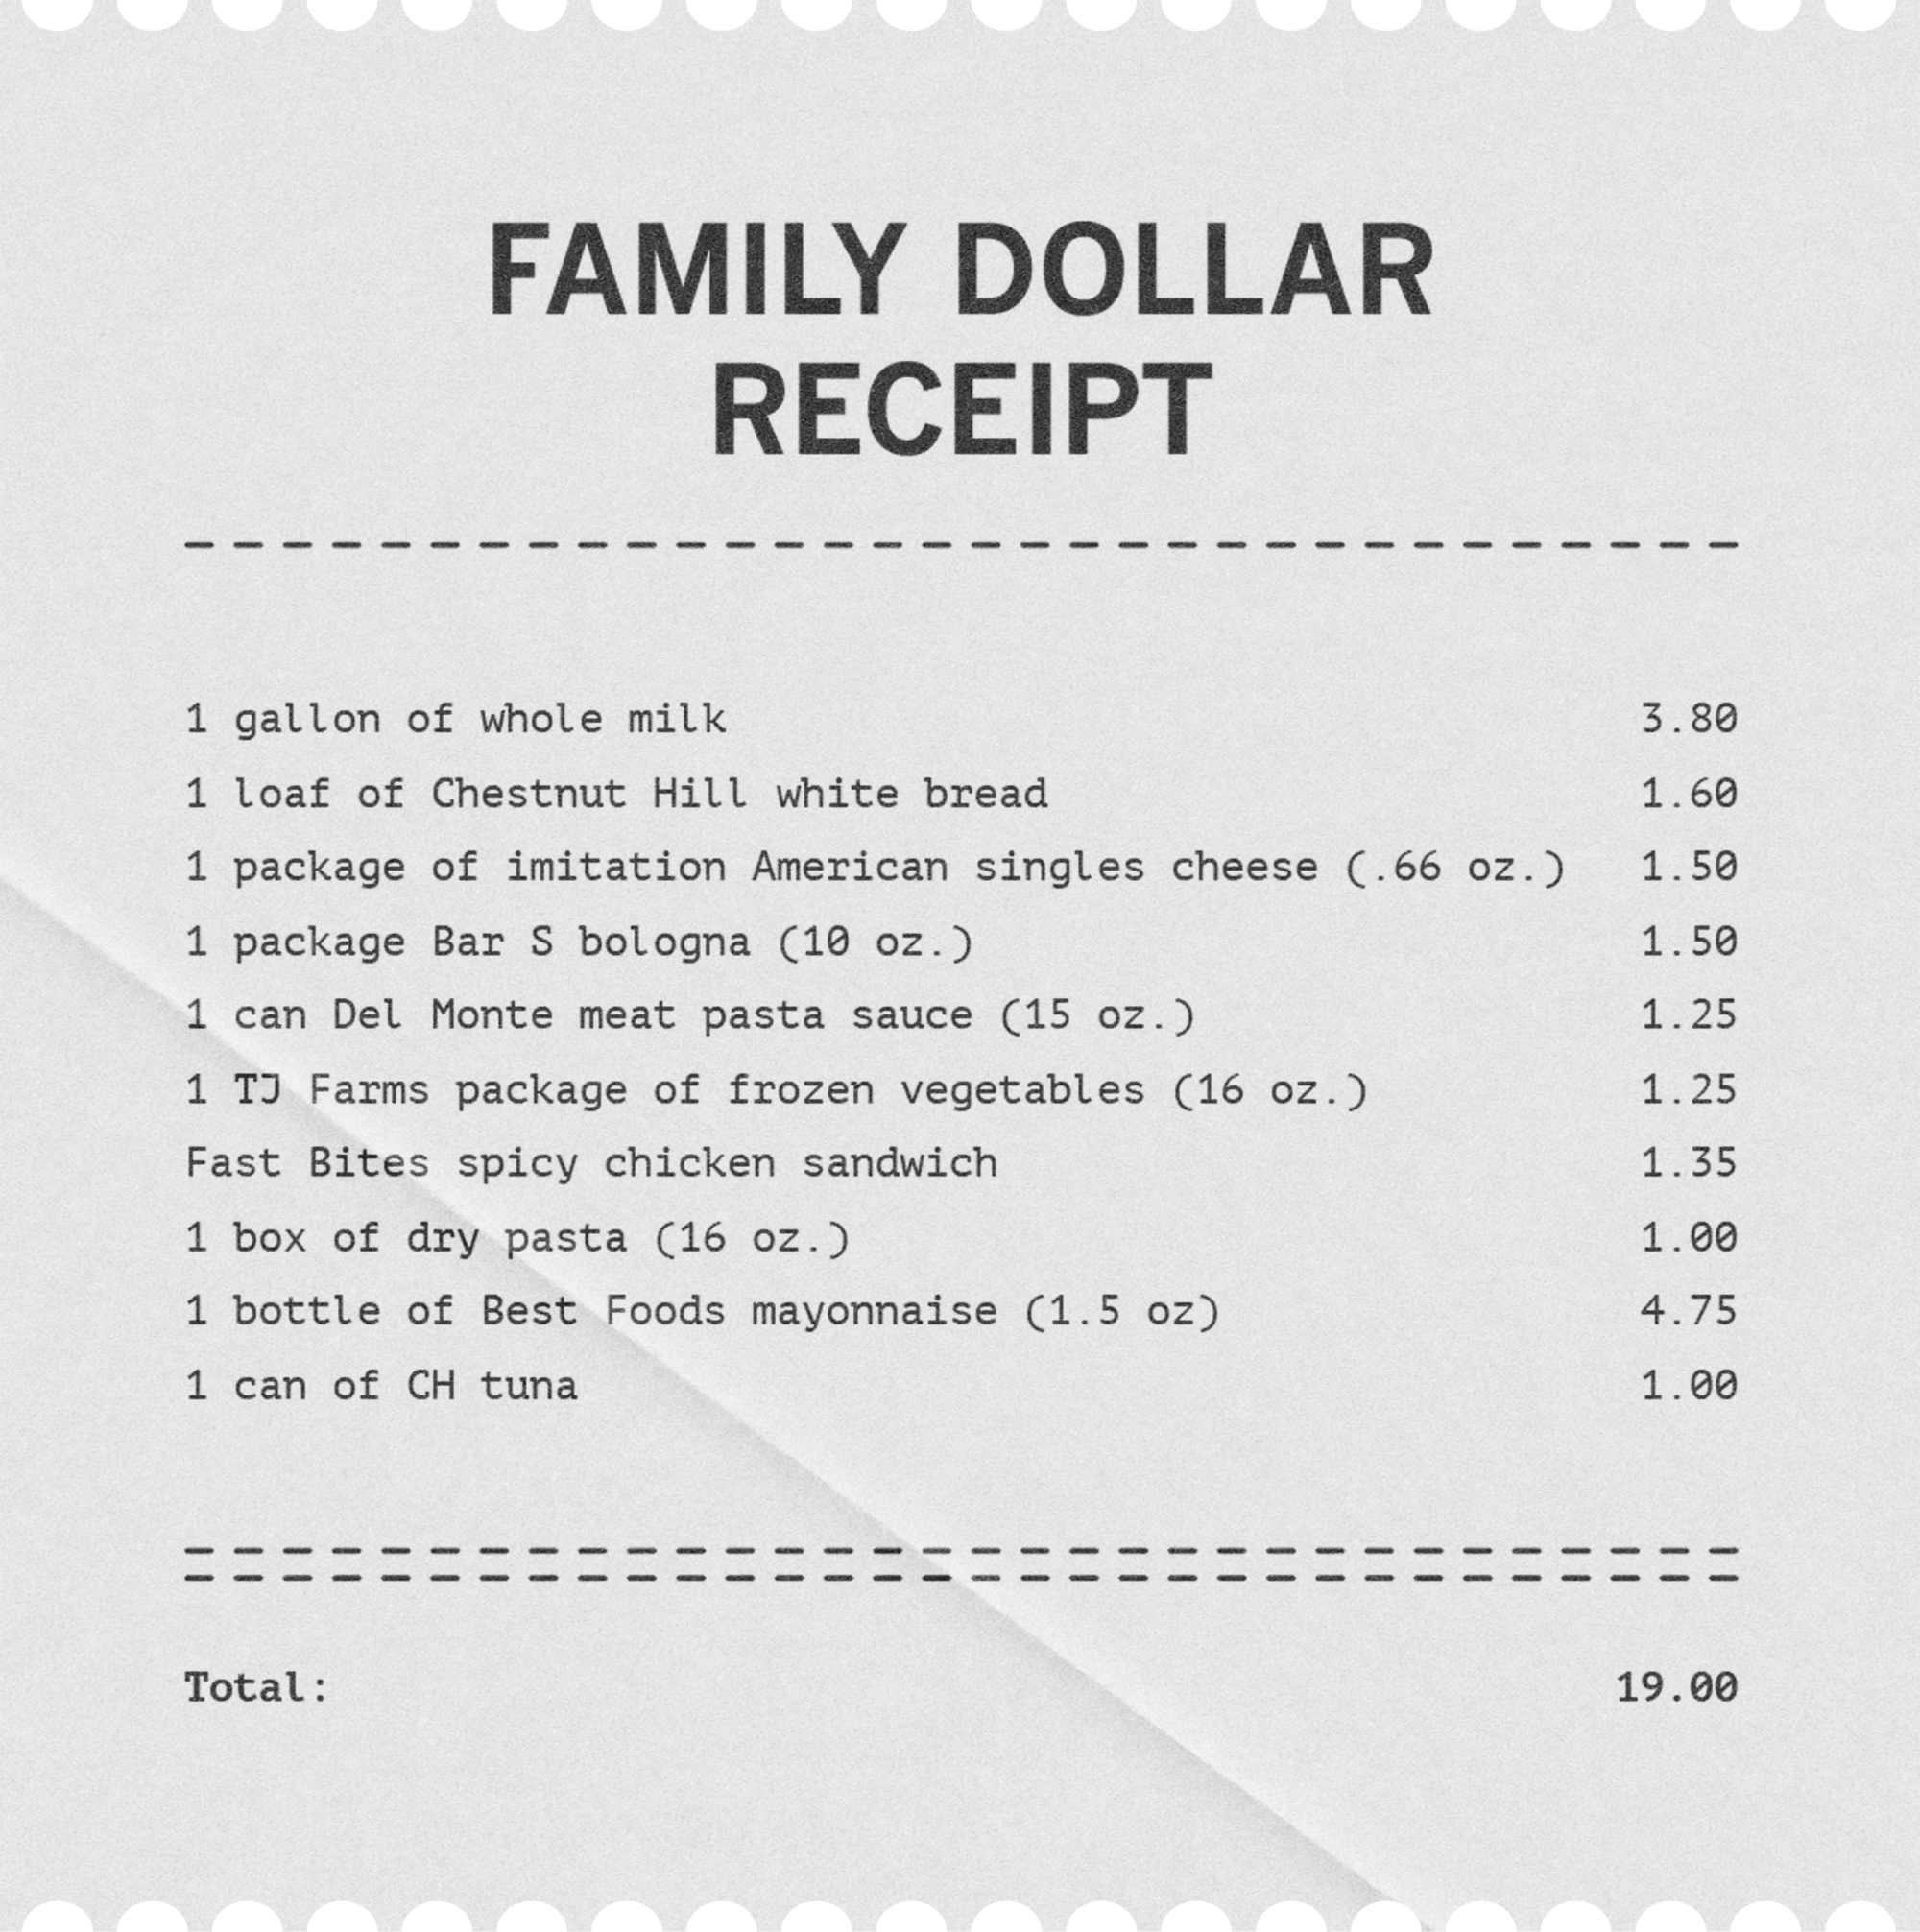 Family Dollar receipt